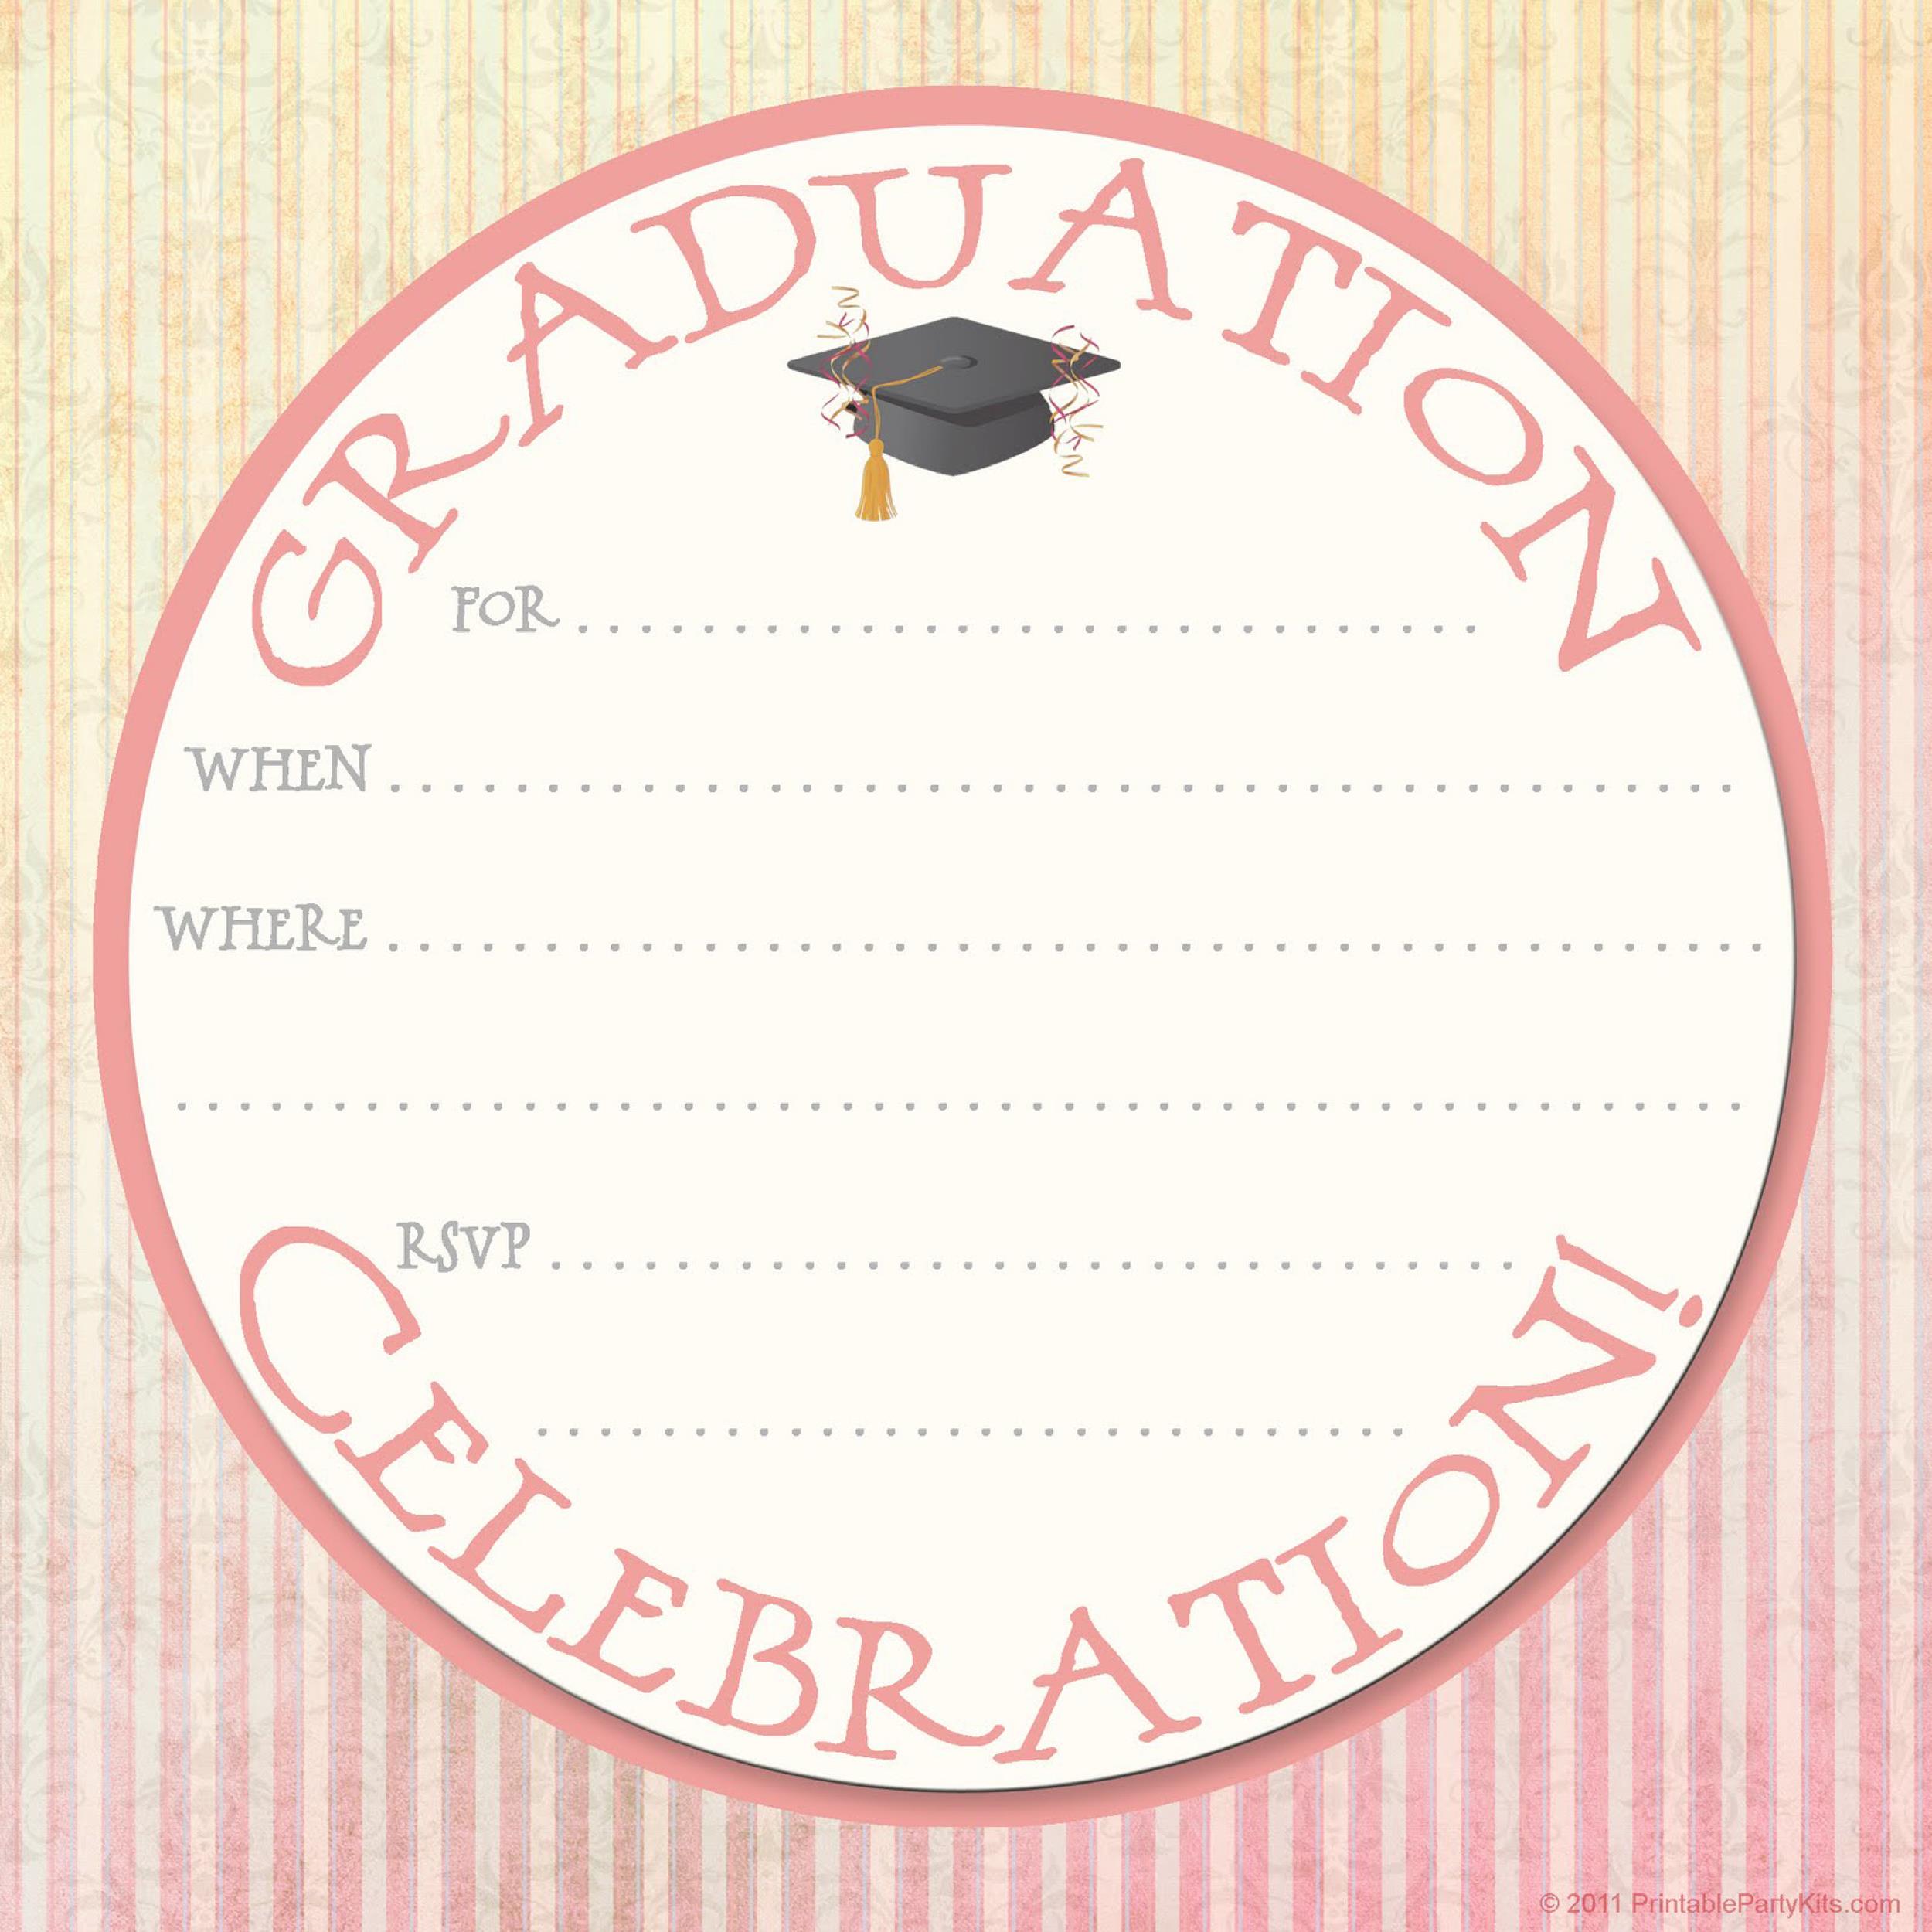 40+ FREE Graduation Invitation Templates ᐅ TemplateLab